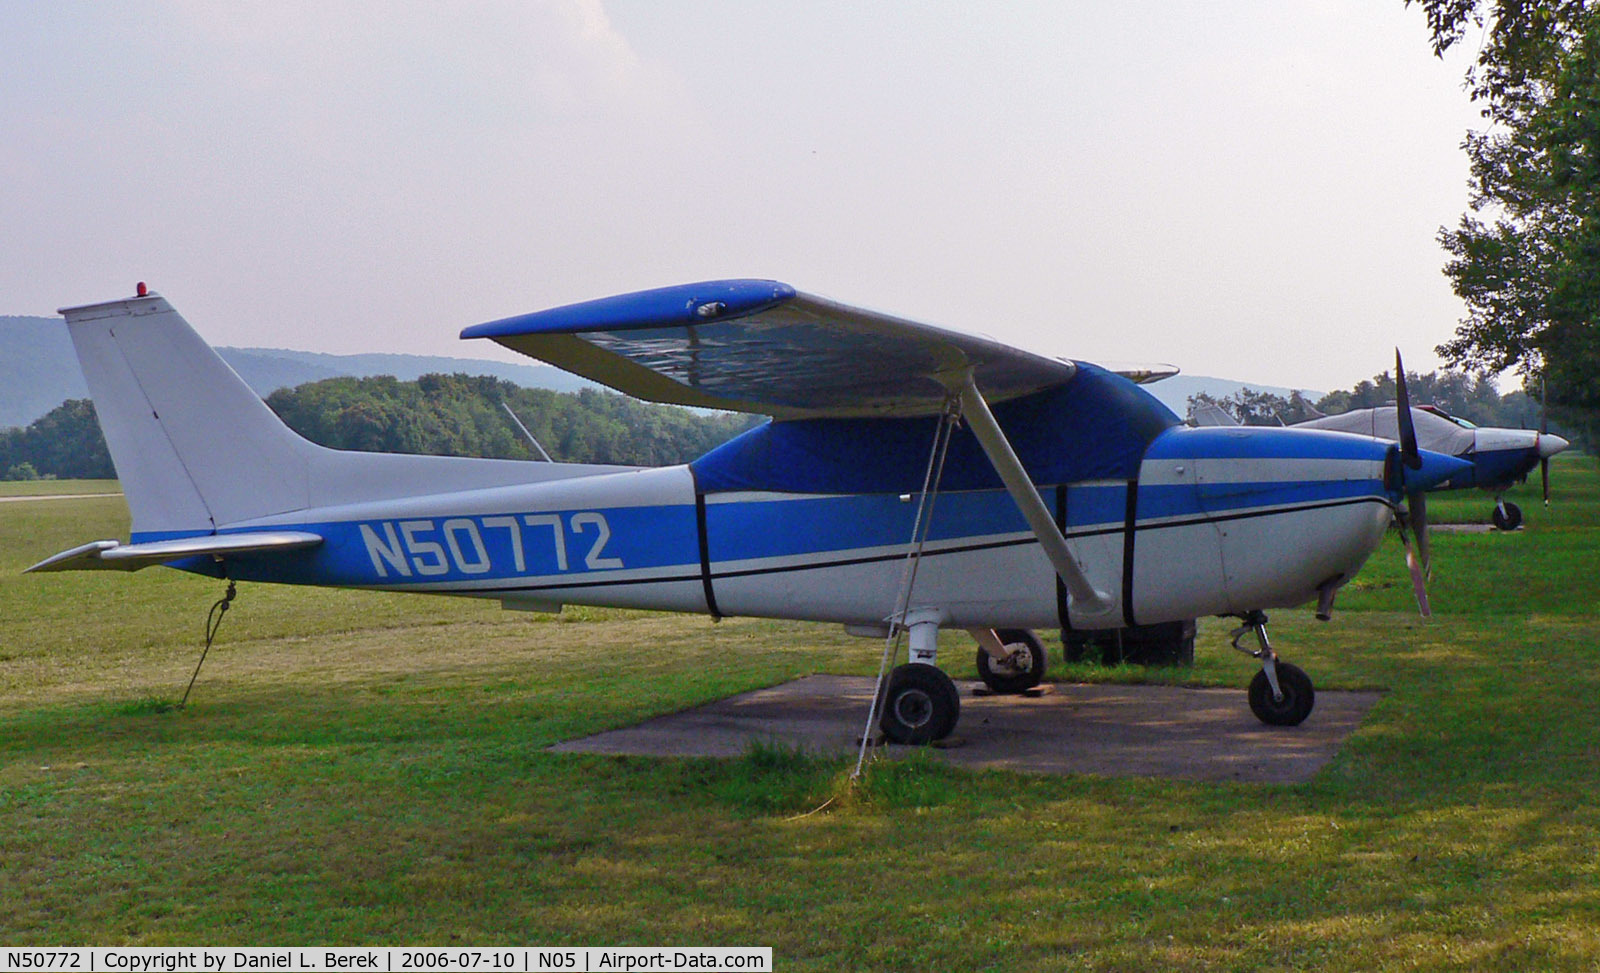 N50772, 1971 Cessna 172L C/N 17259947, 1971-vintage Skyhawk takes refuge under a tarp under the hot evening sun.